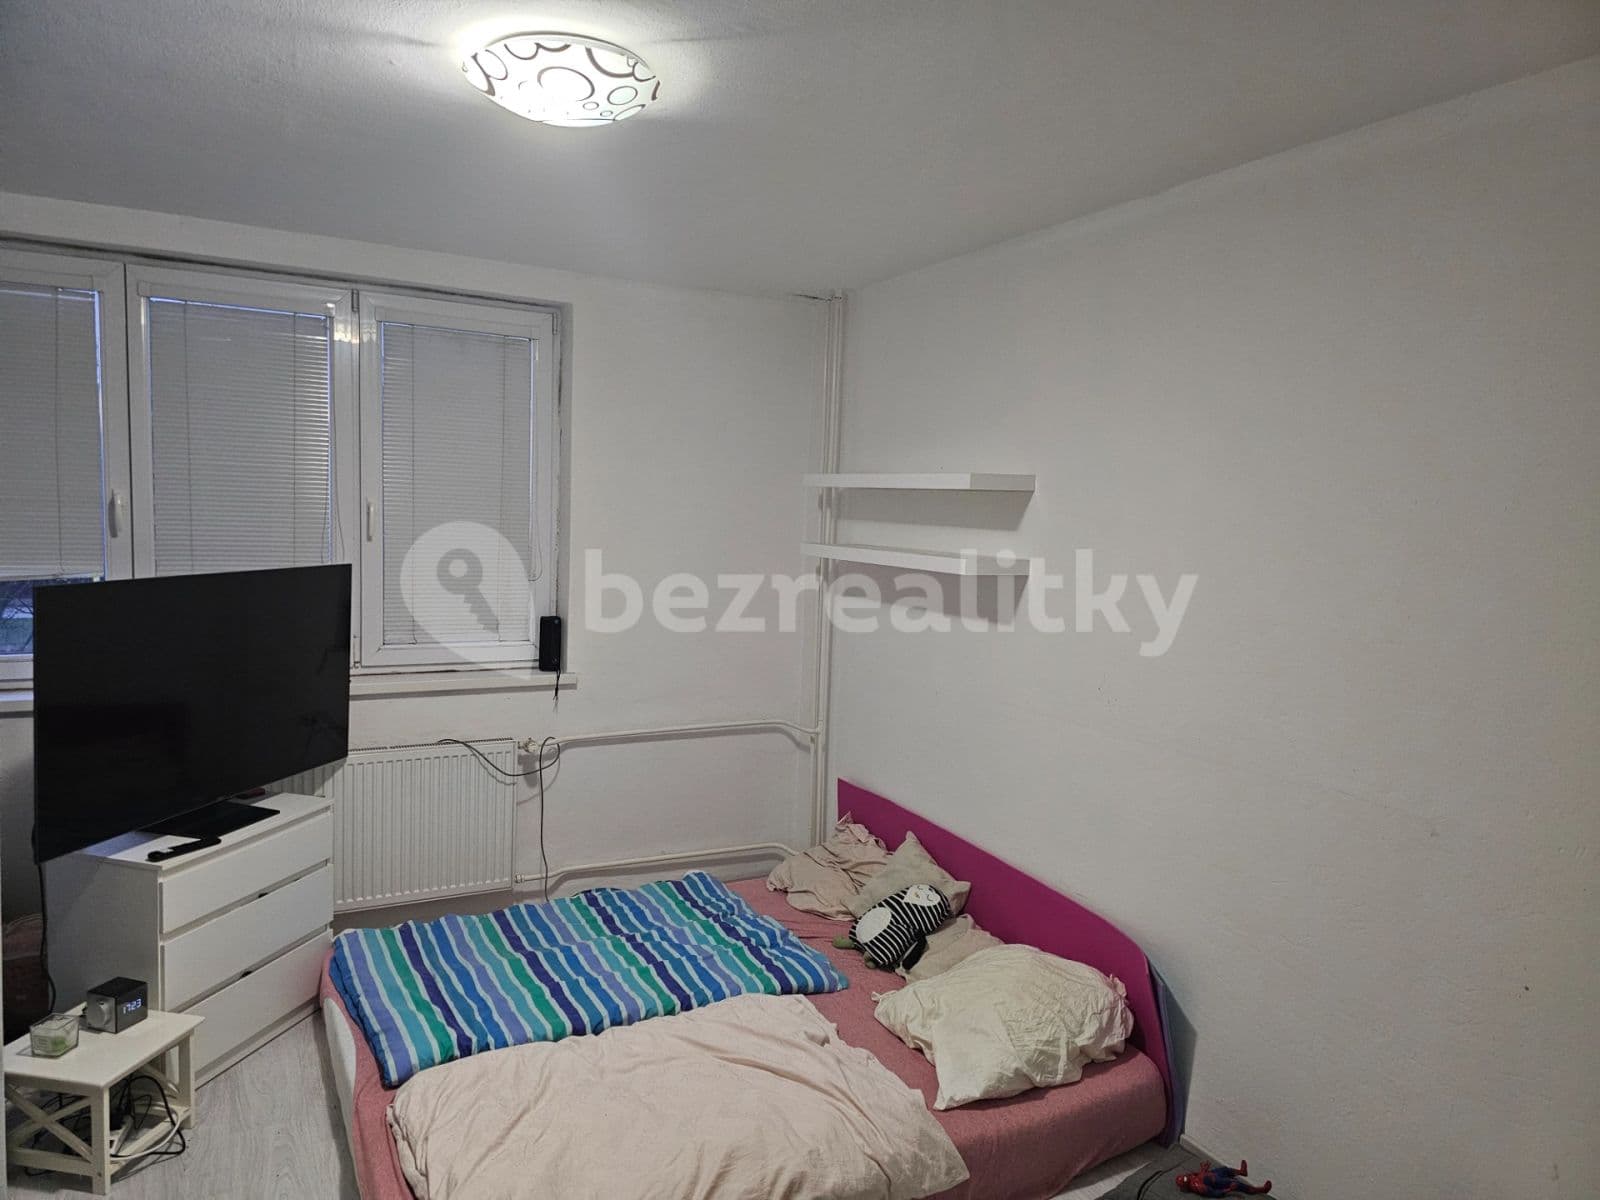 Predaj bytu 4-izbový 105 m², Horymírova, Frýdek-Místek, Moravskoslezský kraj